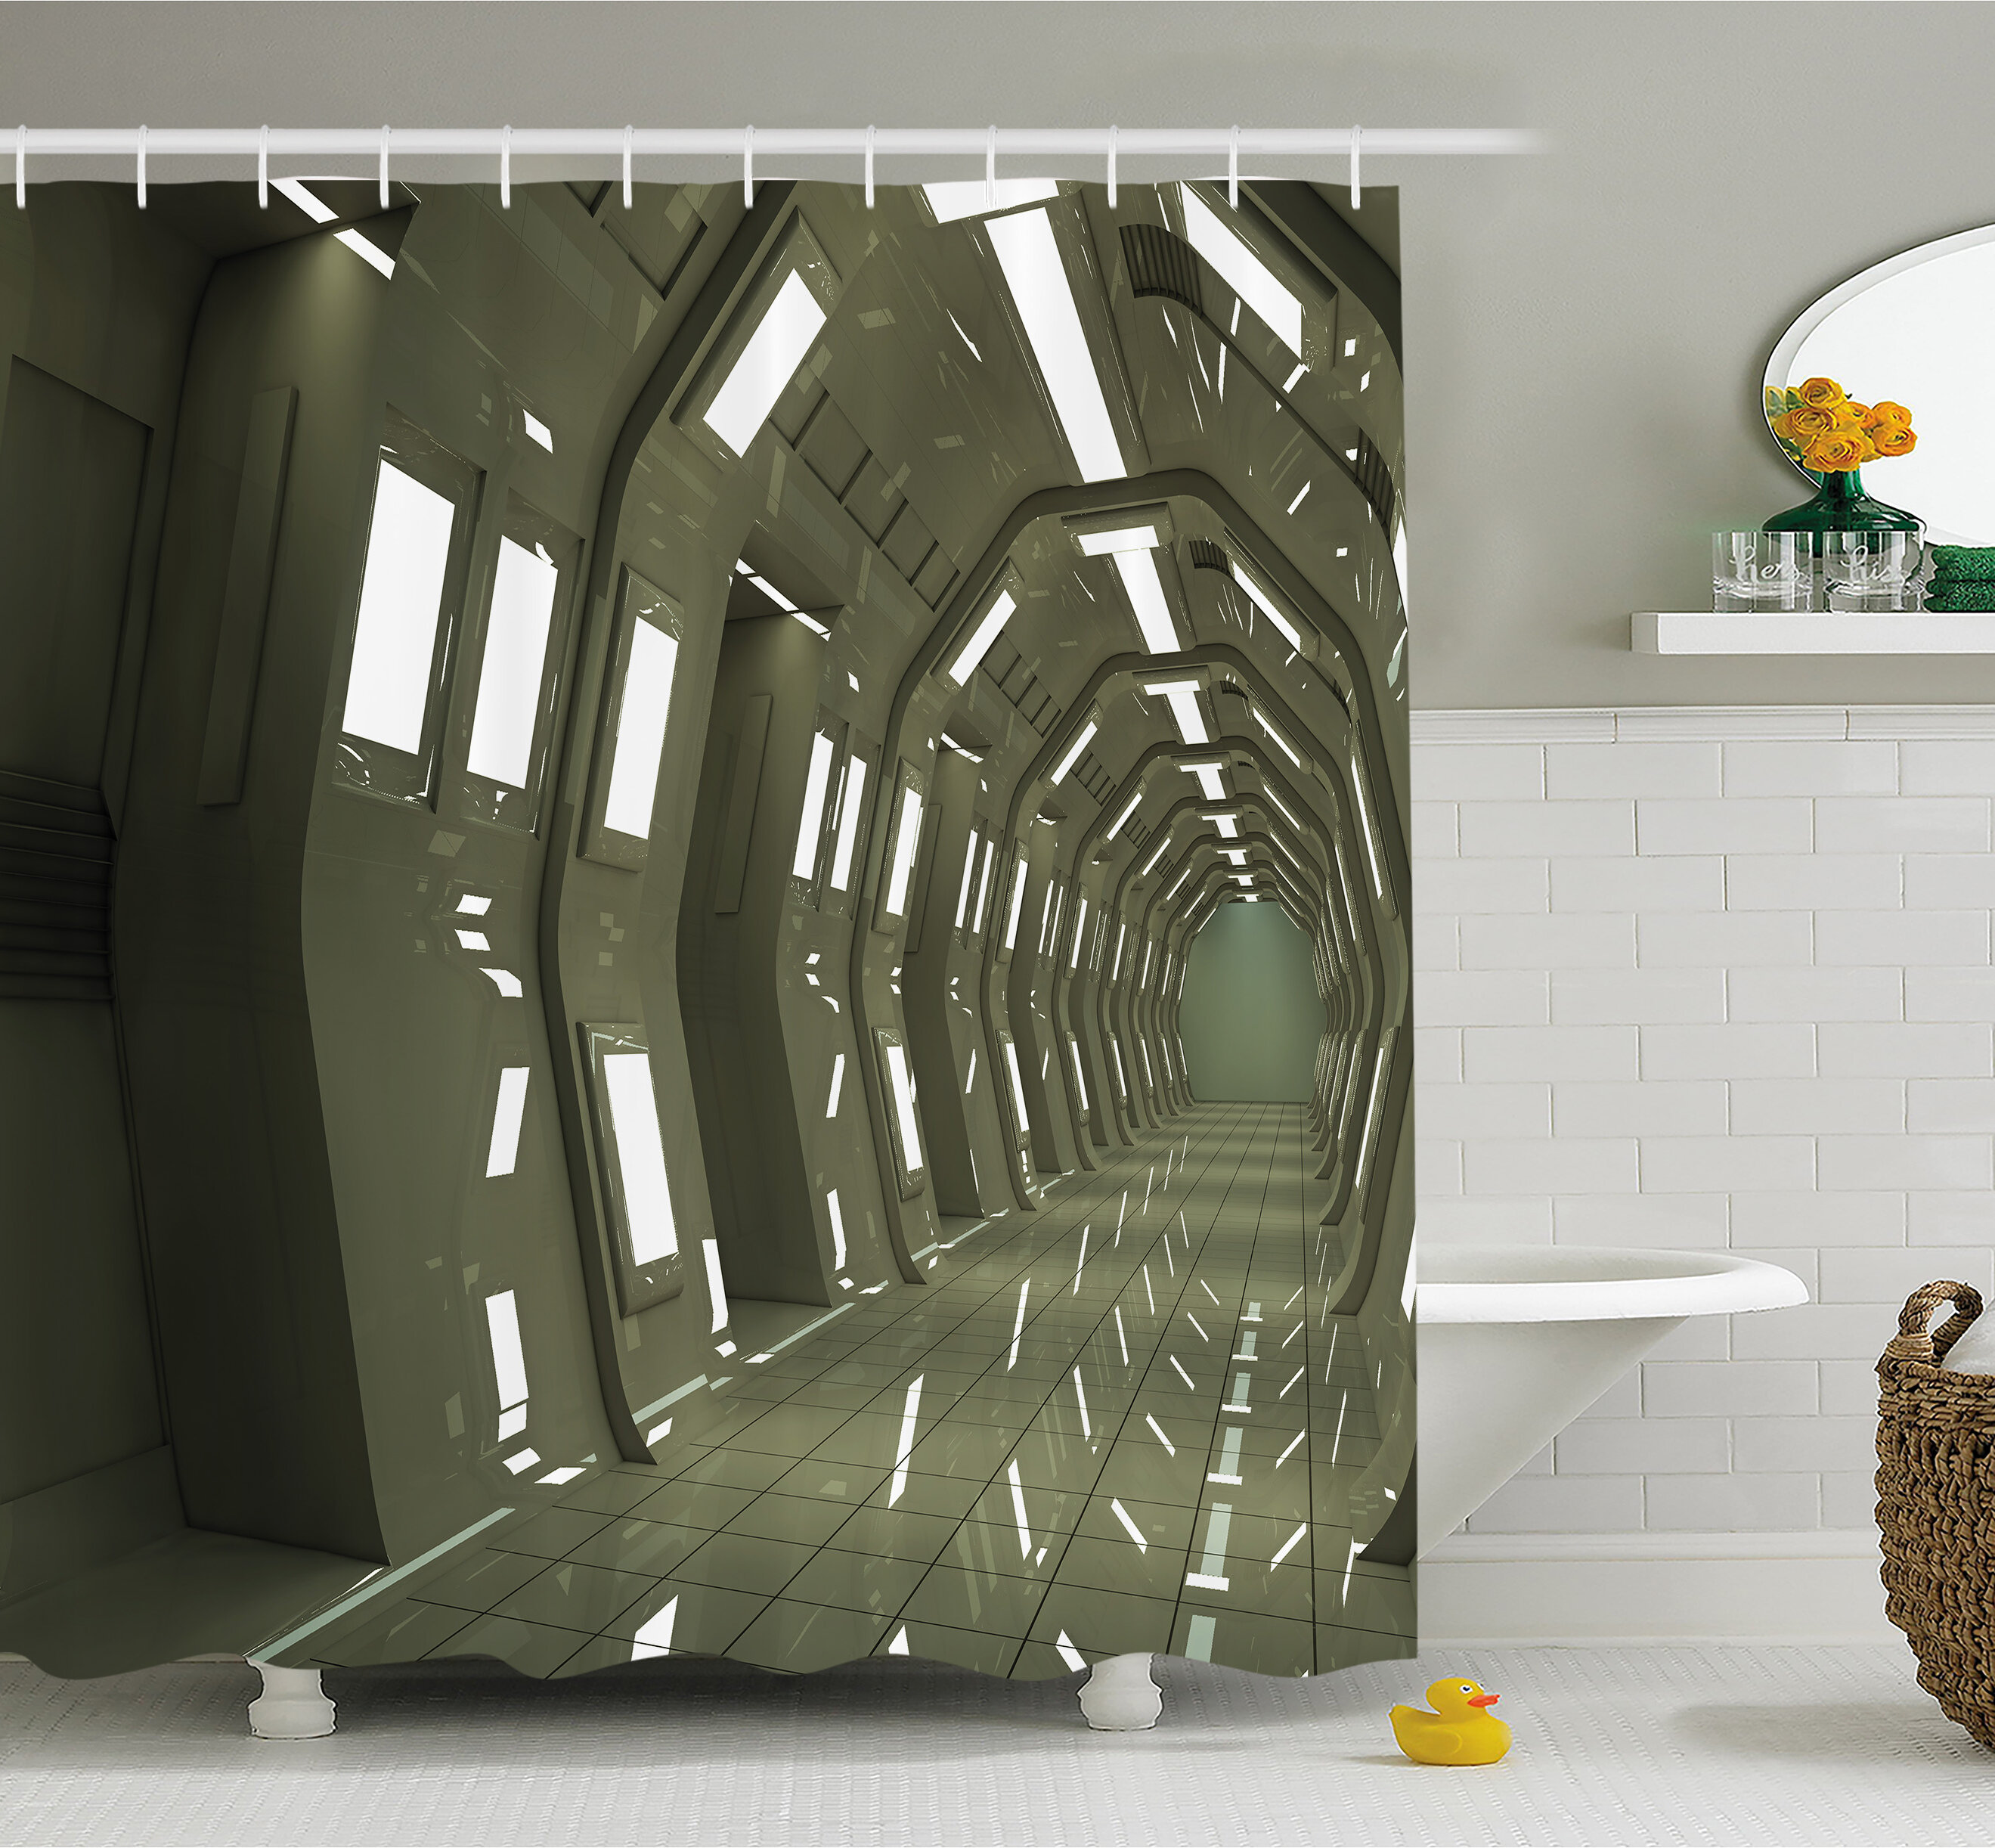 Star Alien Wars 3D Printed Shower Curtain Bathroom Curtains